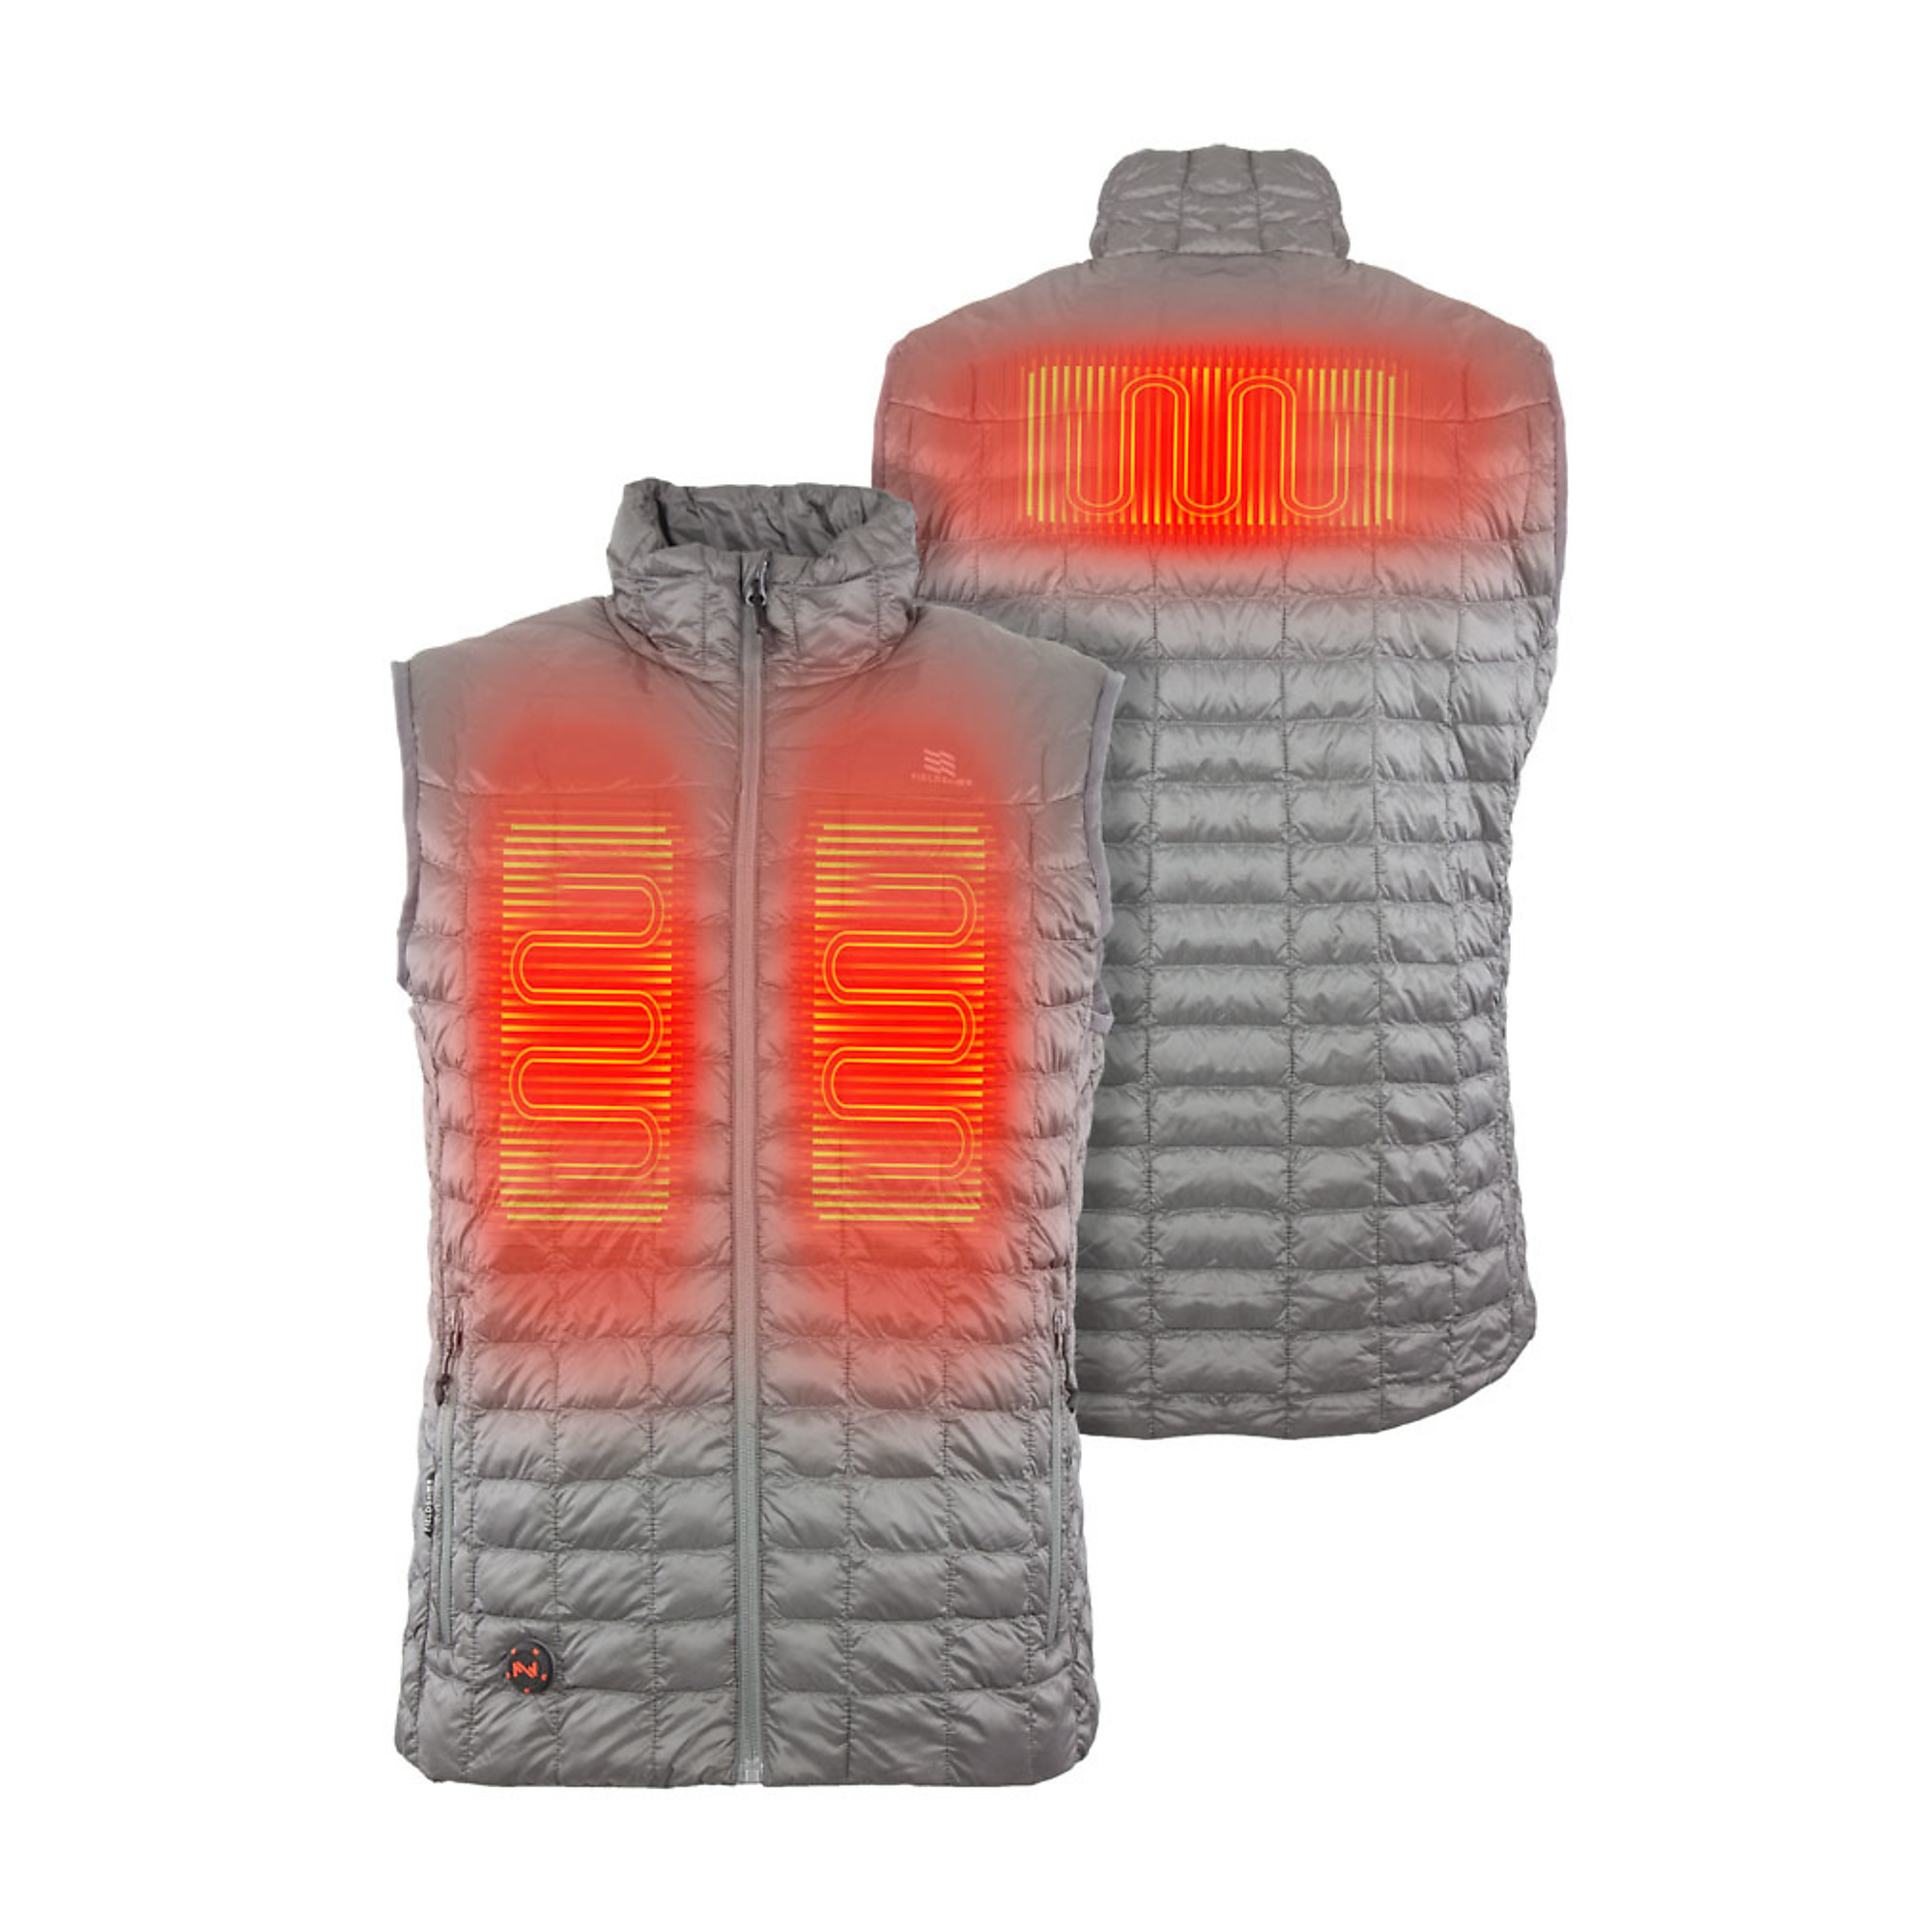 Fieldsheer, Men's Backcountry Heated Vest with 7.4v Battery, Size 2XL, Color Grey, Model MWMV04320620